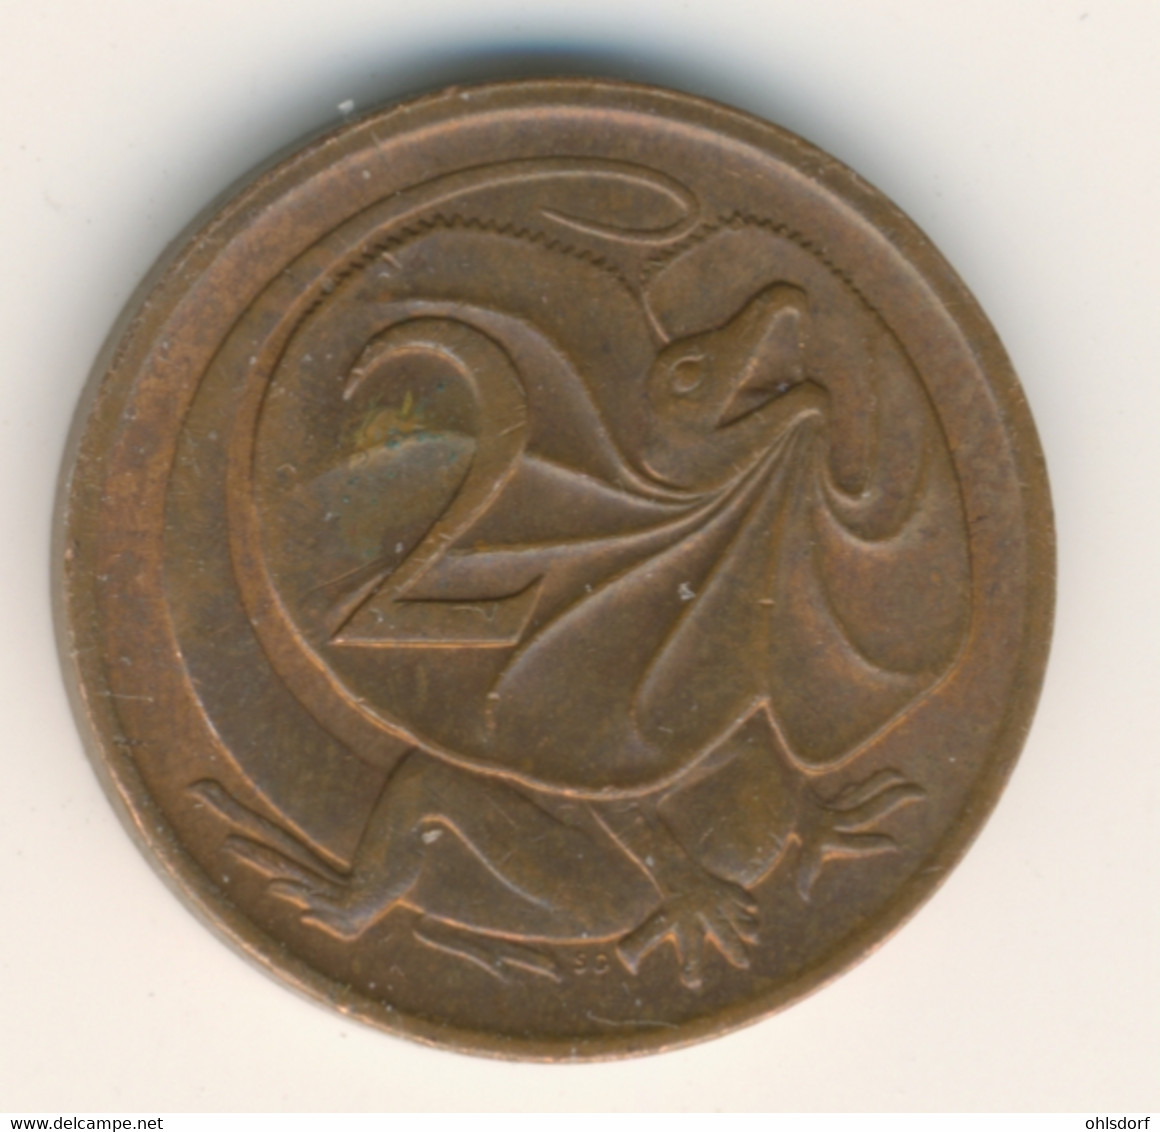 AUSTRALIA 1984: 2 Cents, KM 63 - 2 Cents